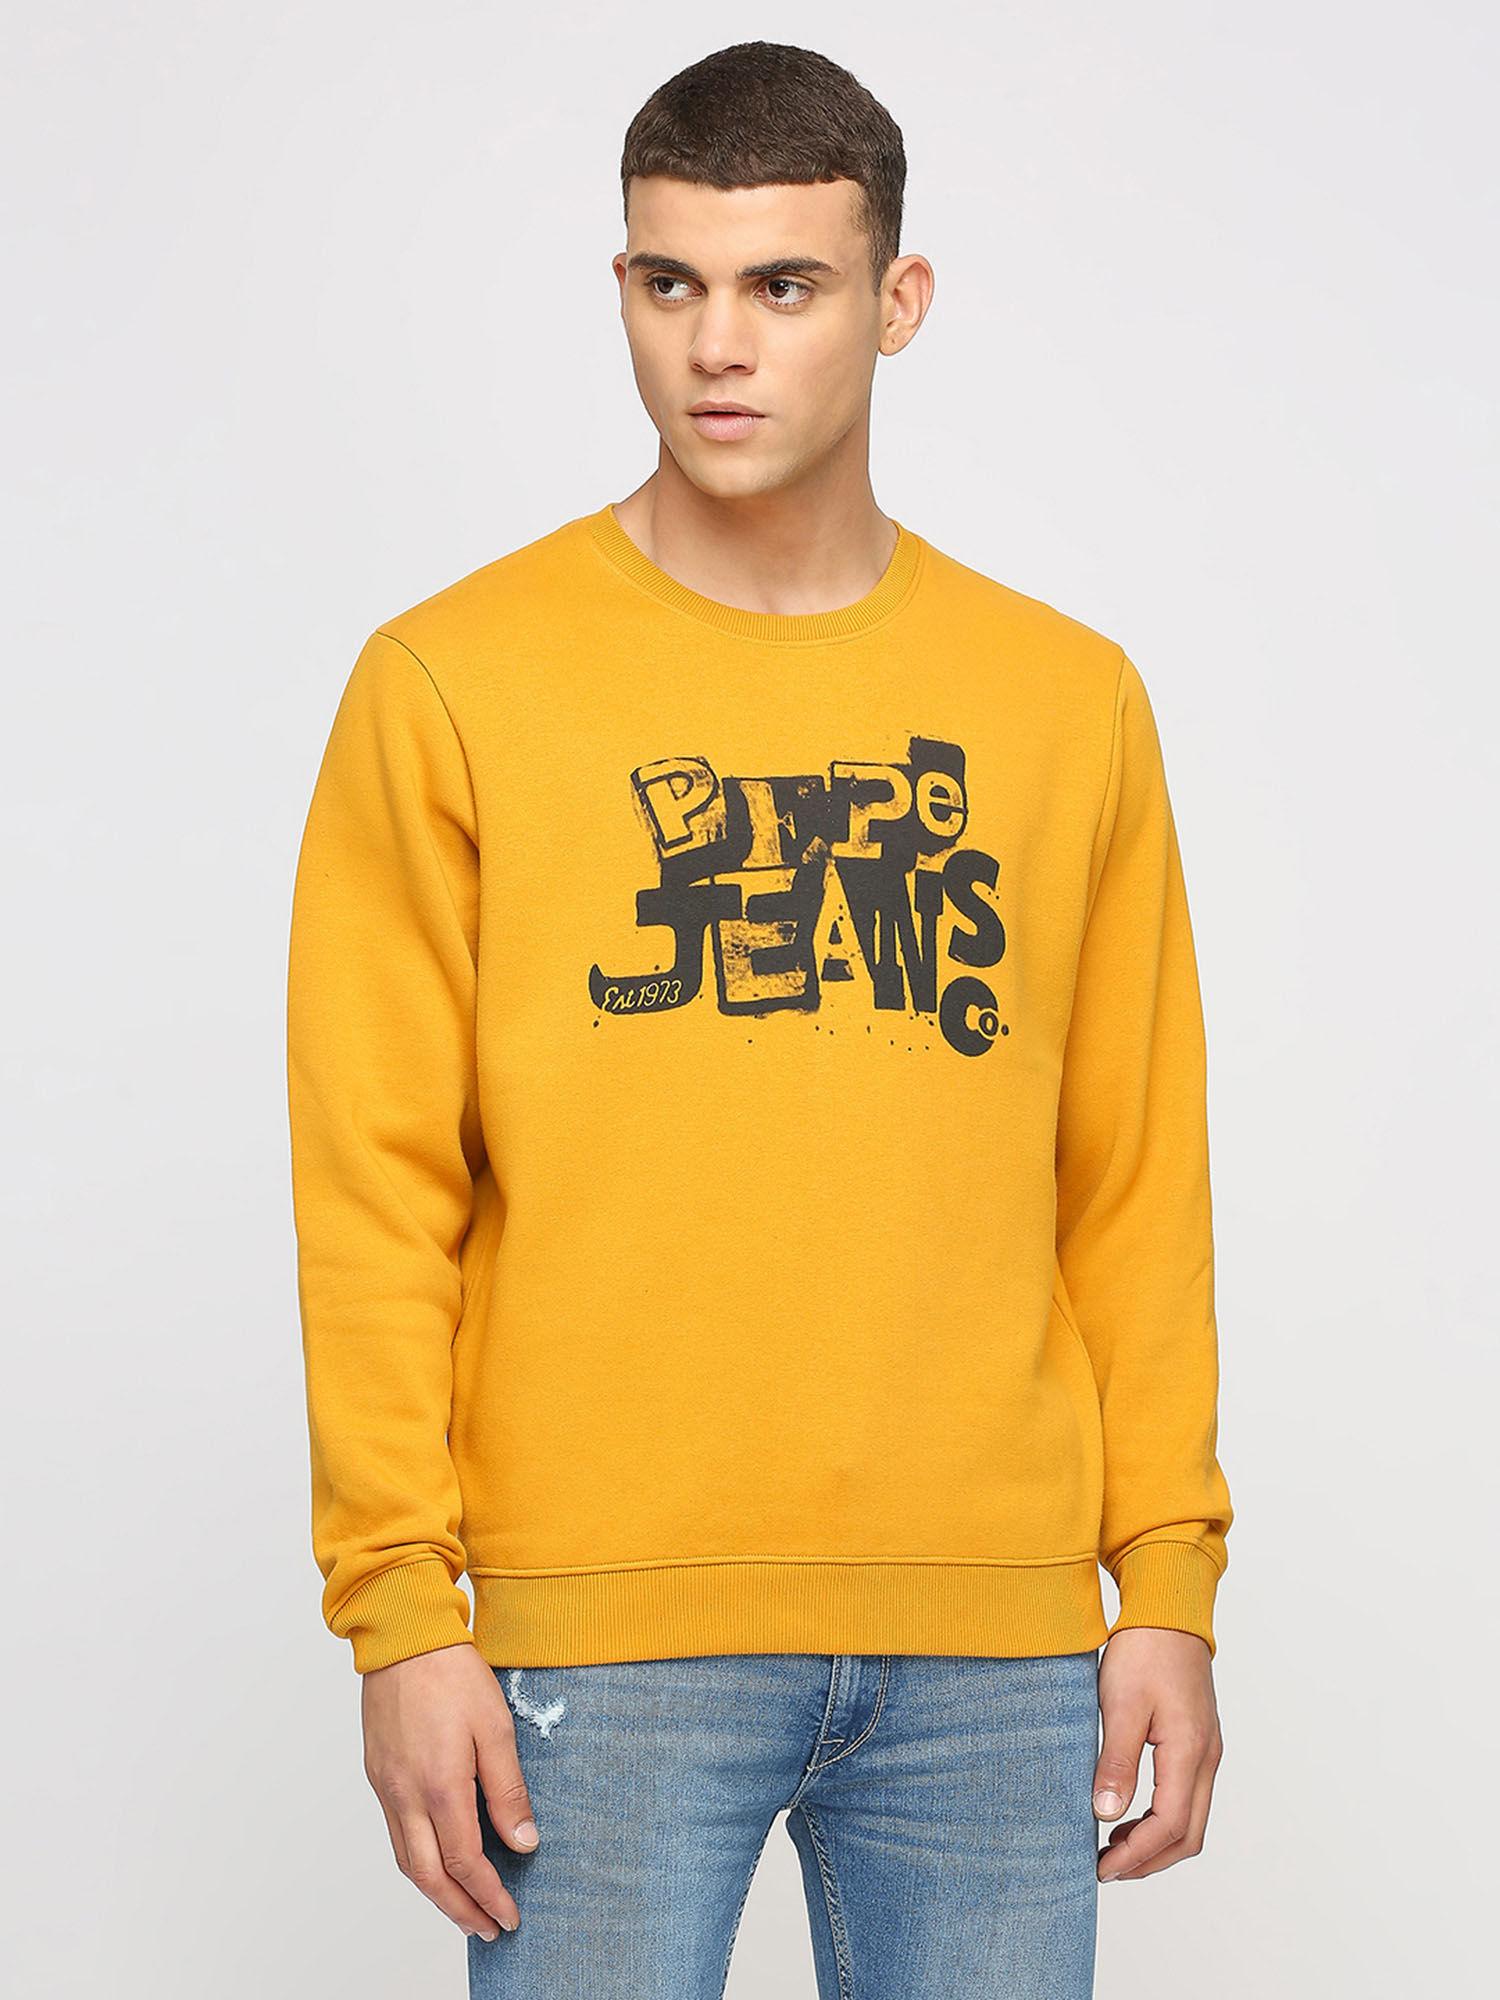 karl-brand-carrier-sweatshirt-yellow